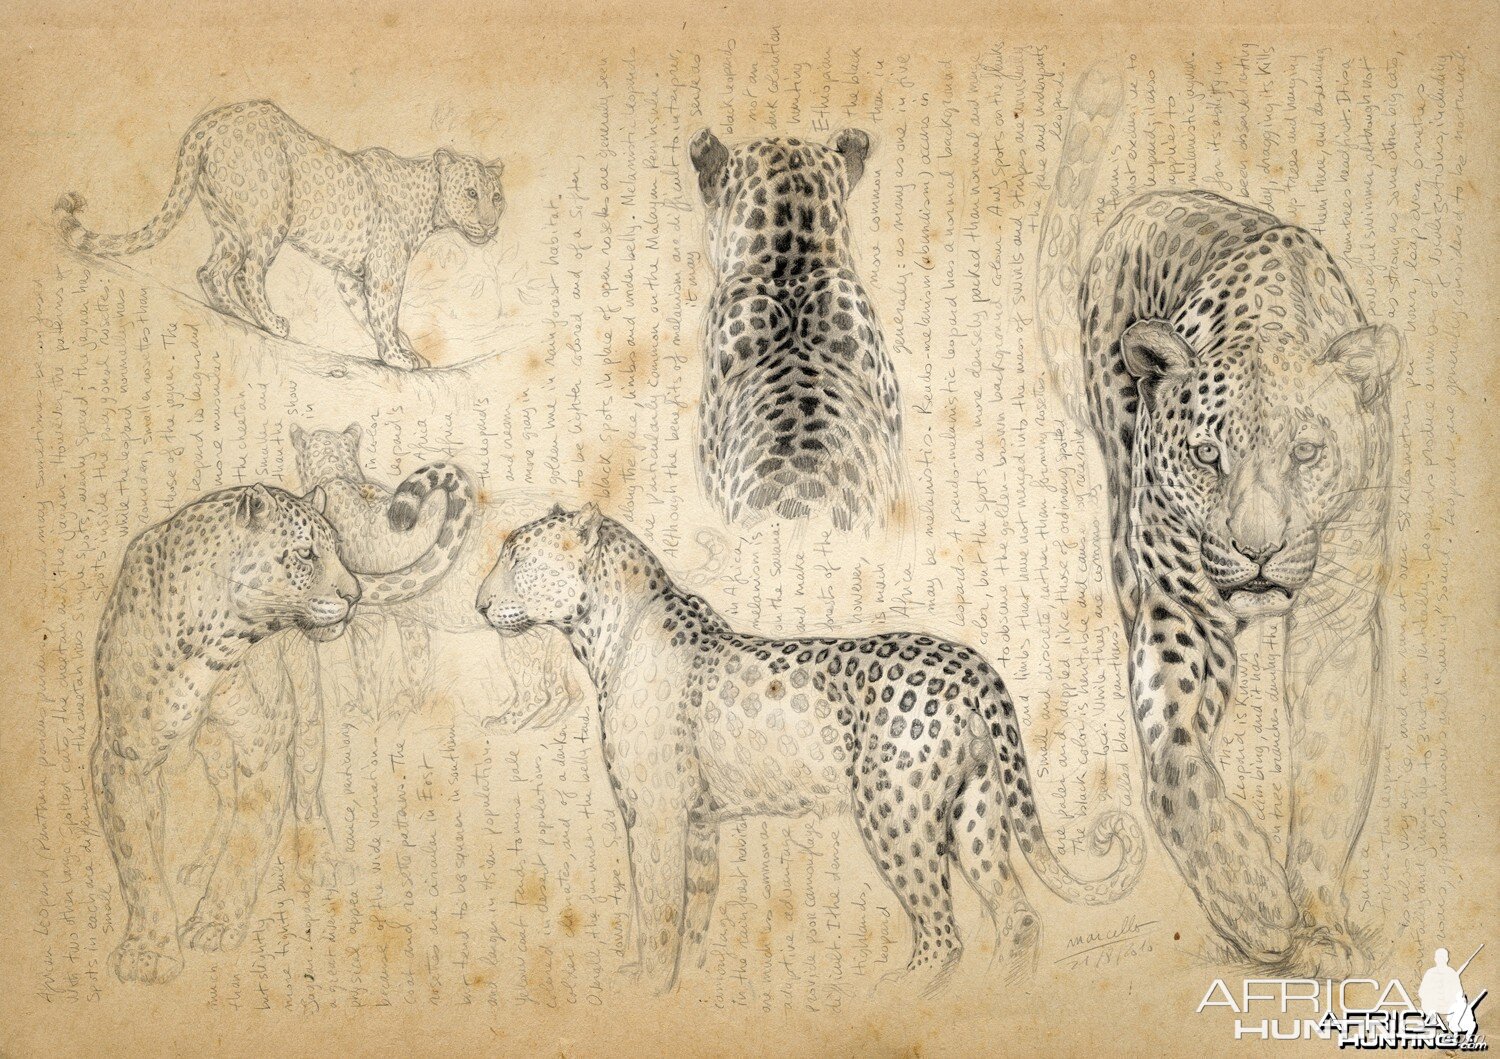 Marcello Pettineo зарисовки животных